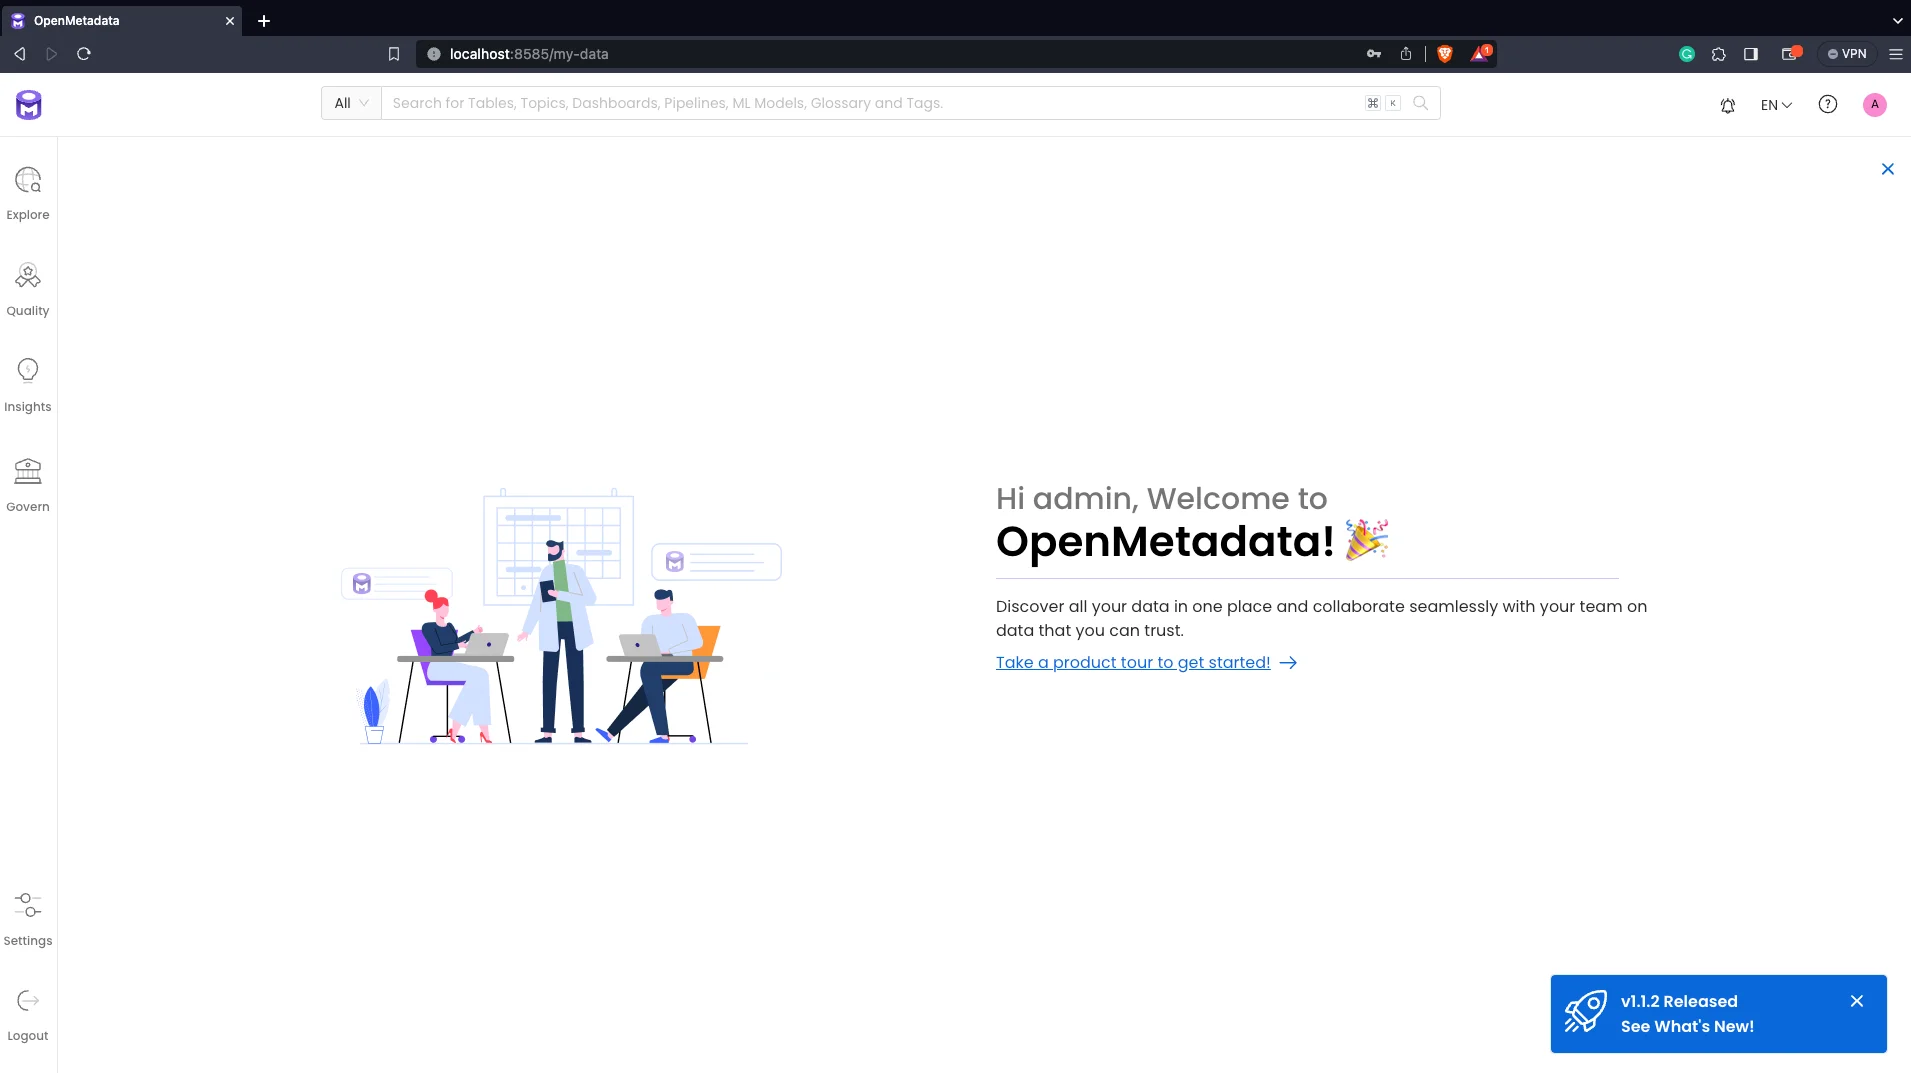 OpenMetadata landing page